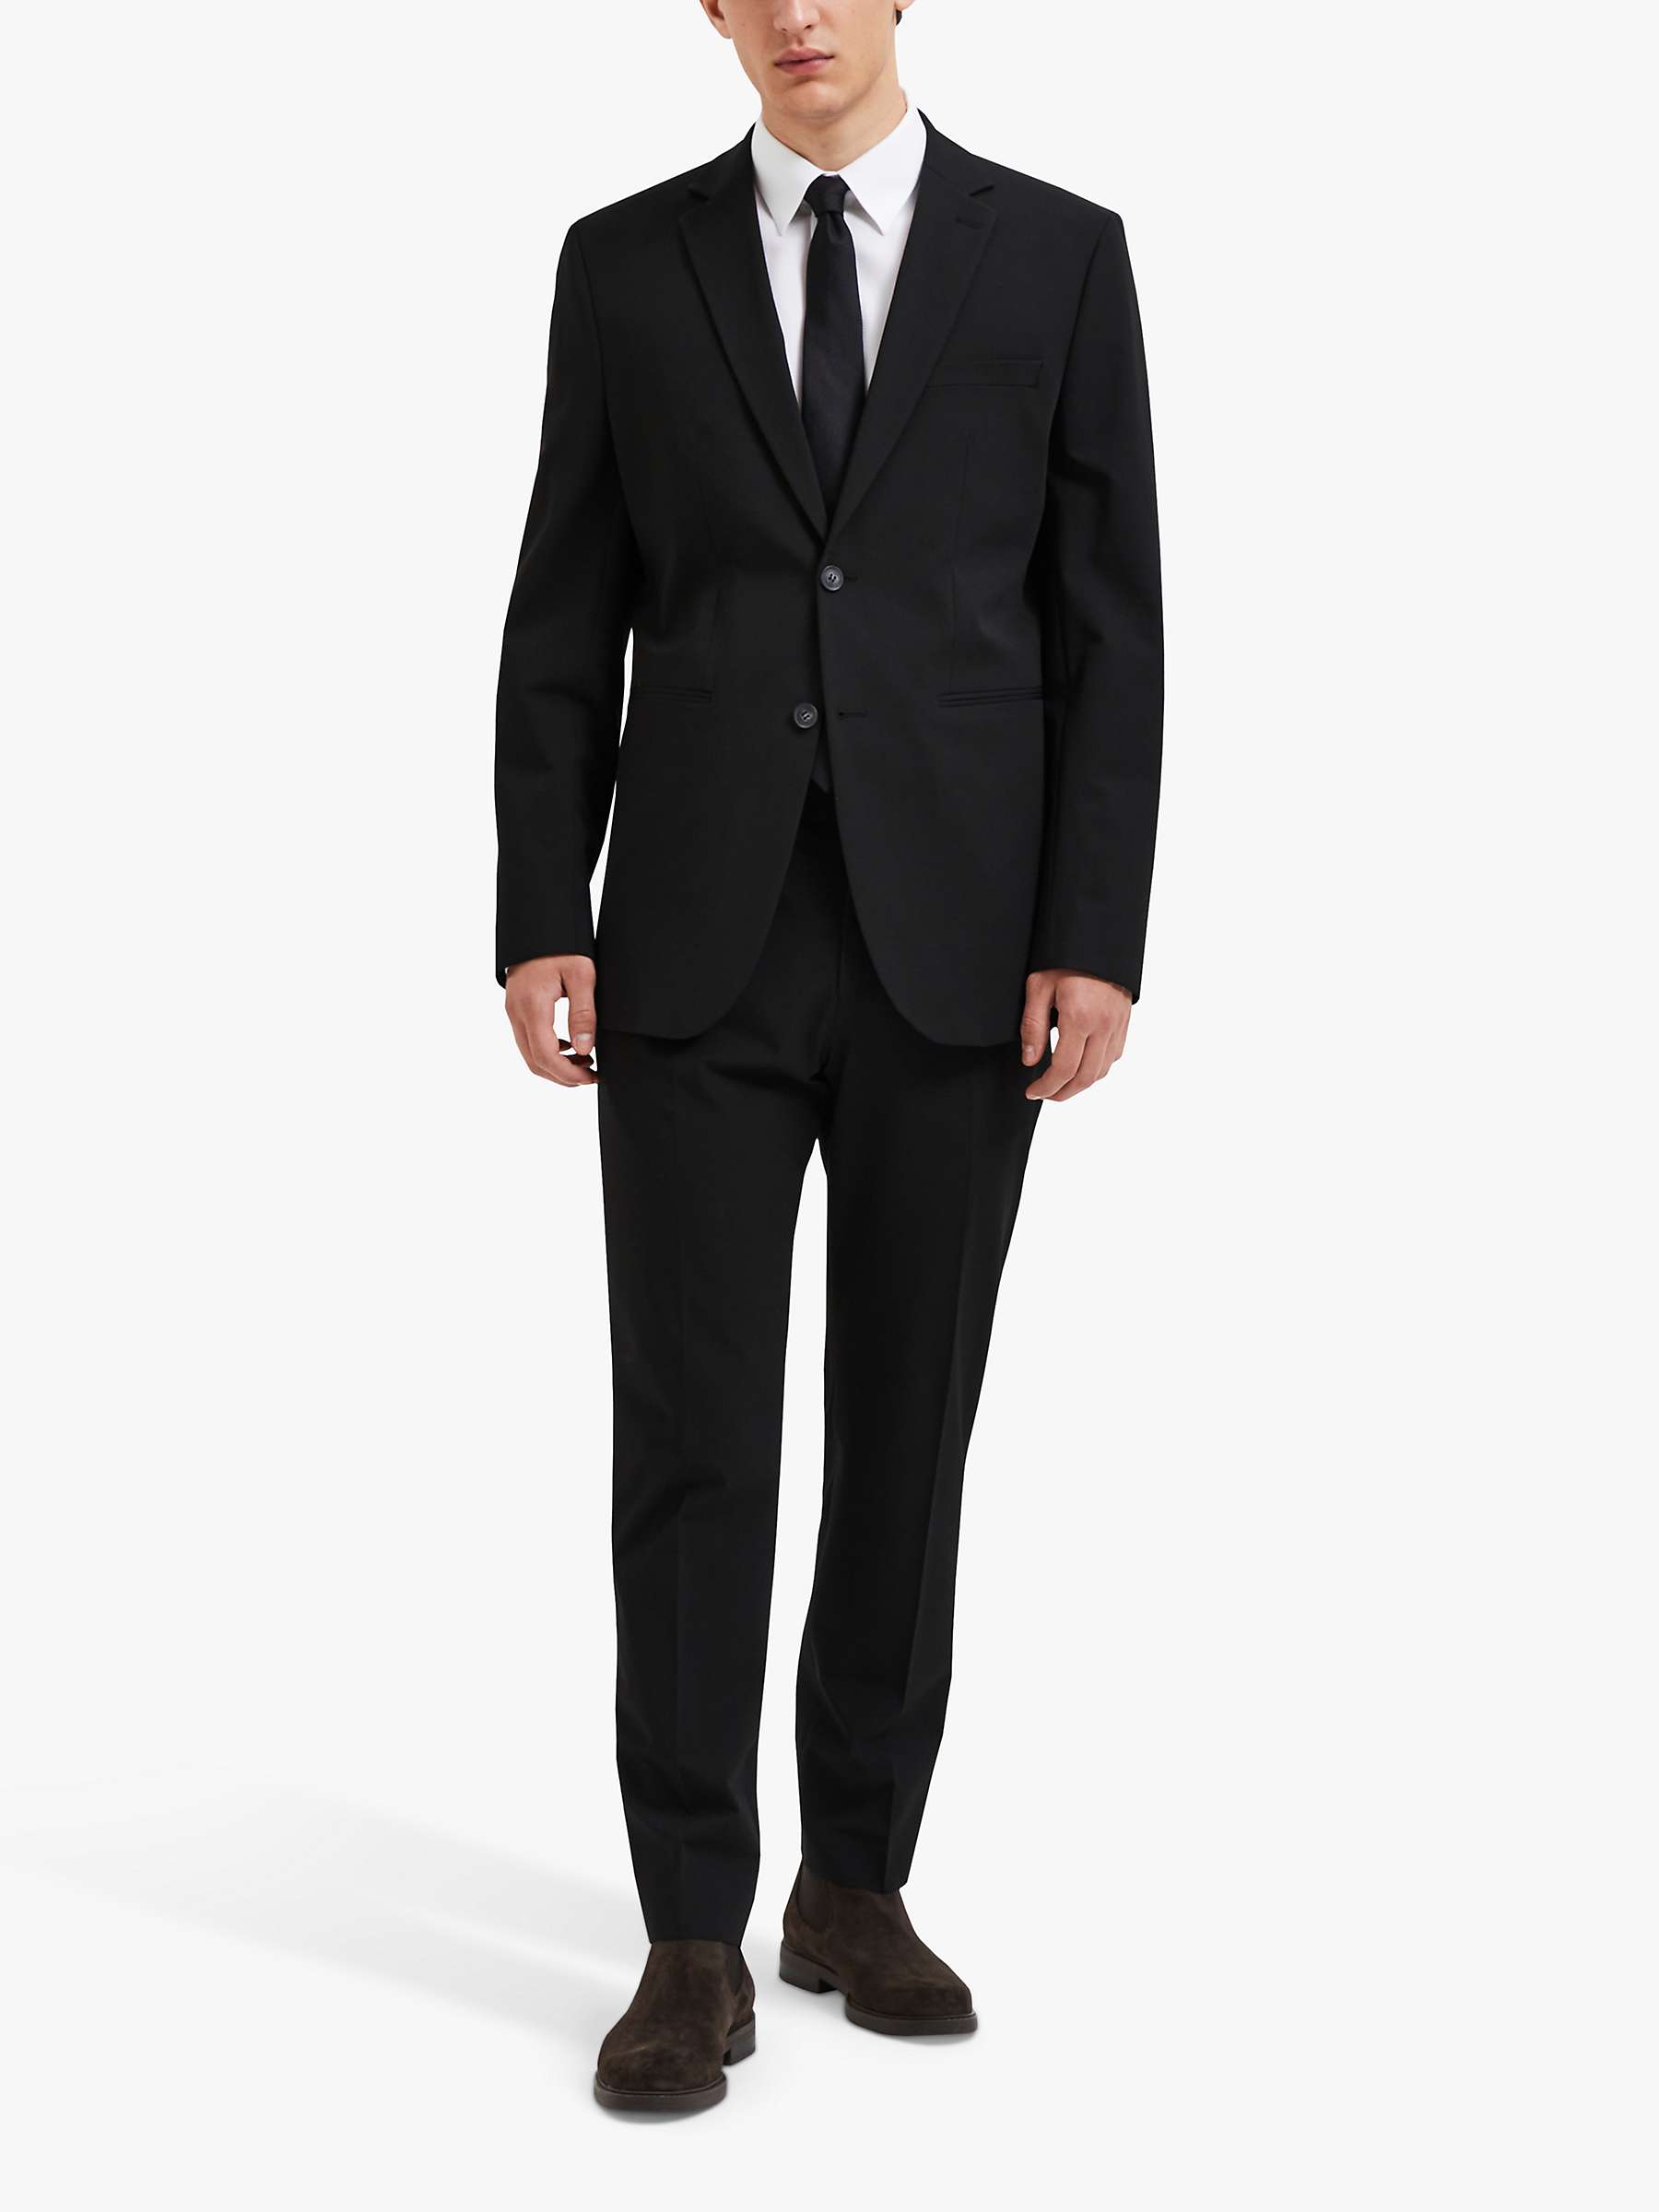 Buy SELECTED HOMME Slim Fit Suit Jacket, Black Online at johnlewis.com